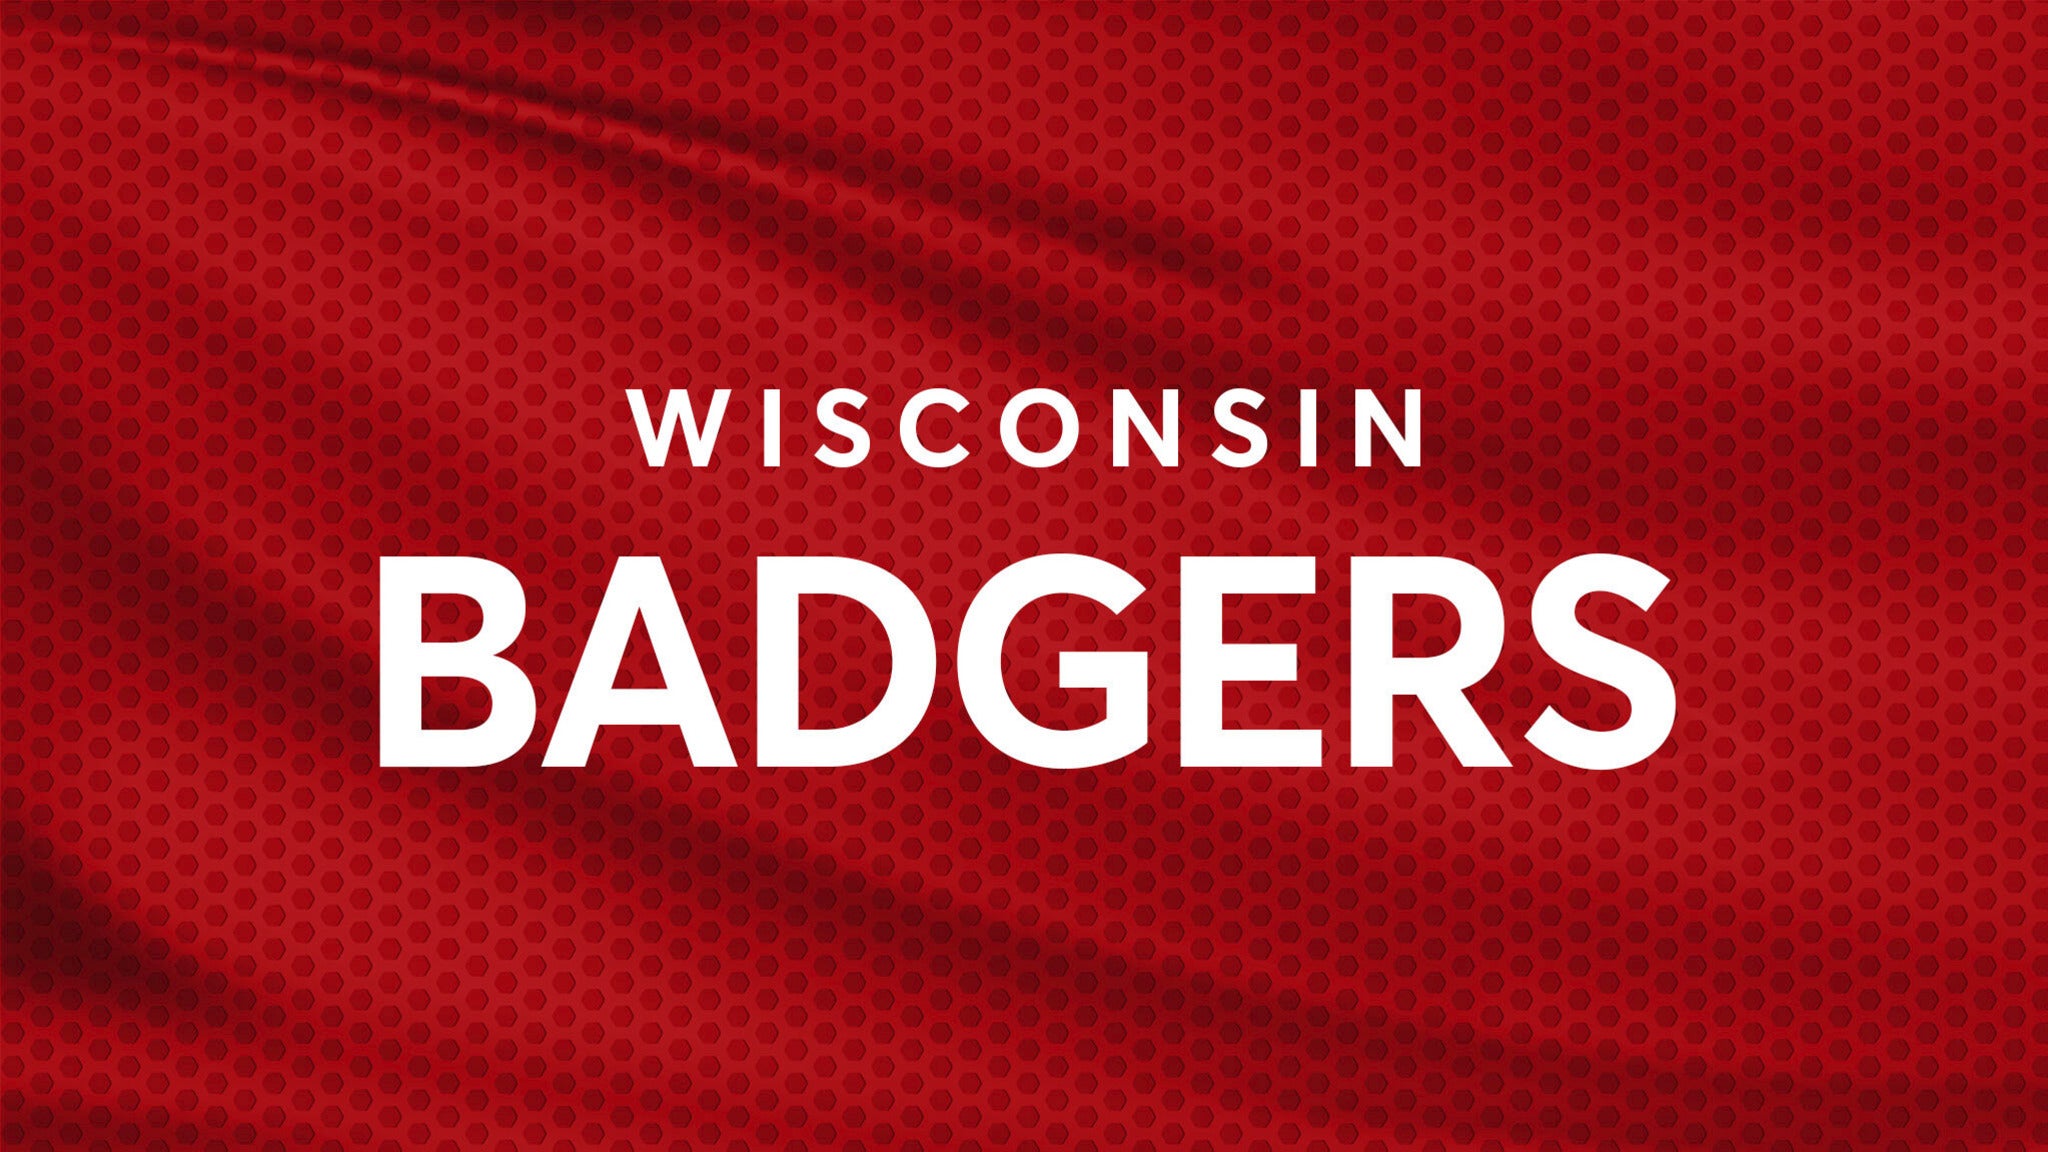 Wisconsin Badgers Football vs. Michigan Wolverines Football